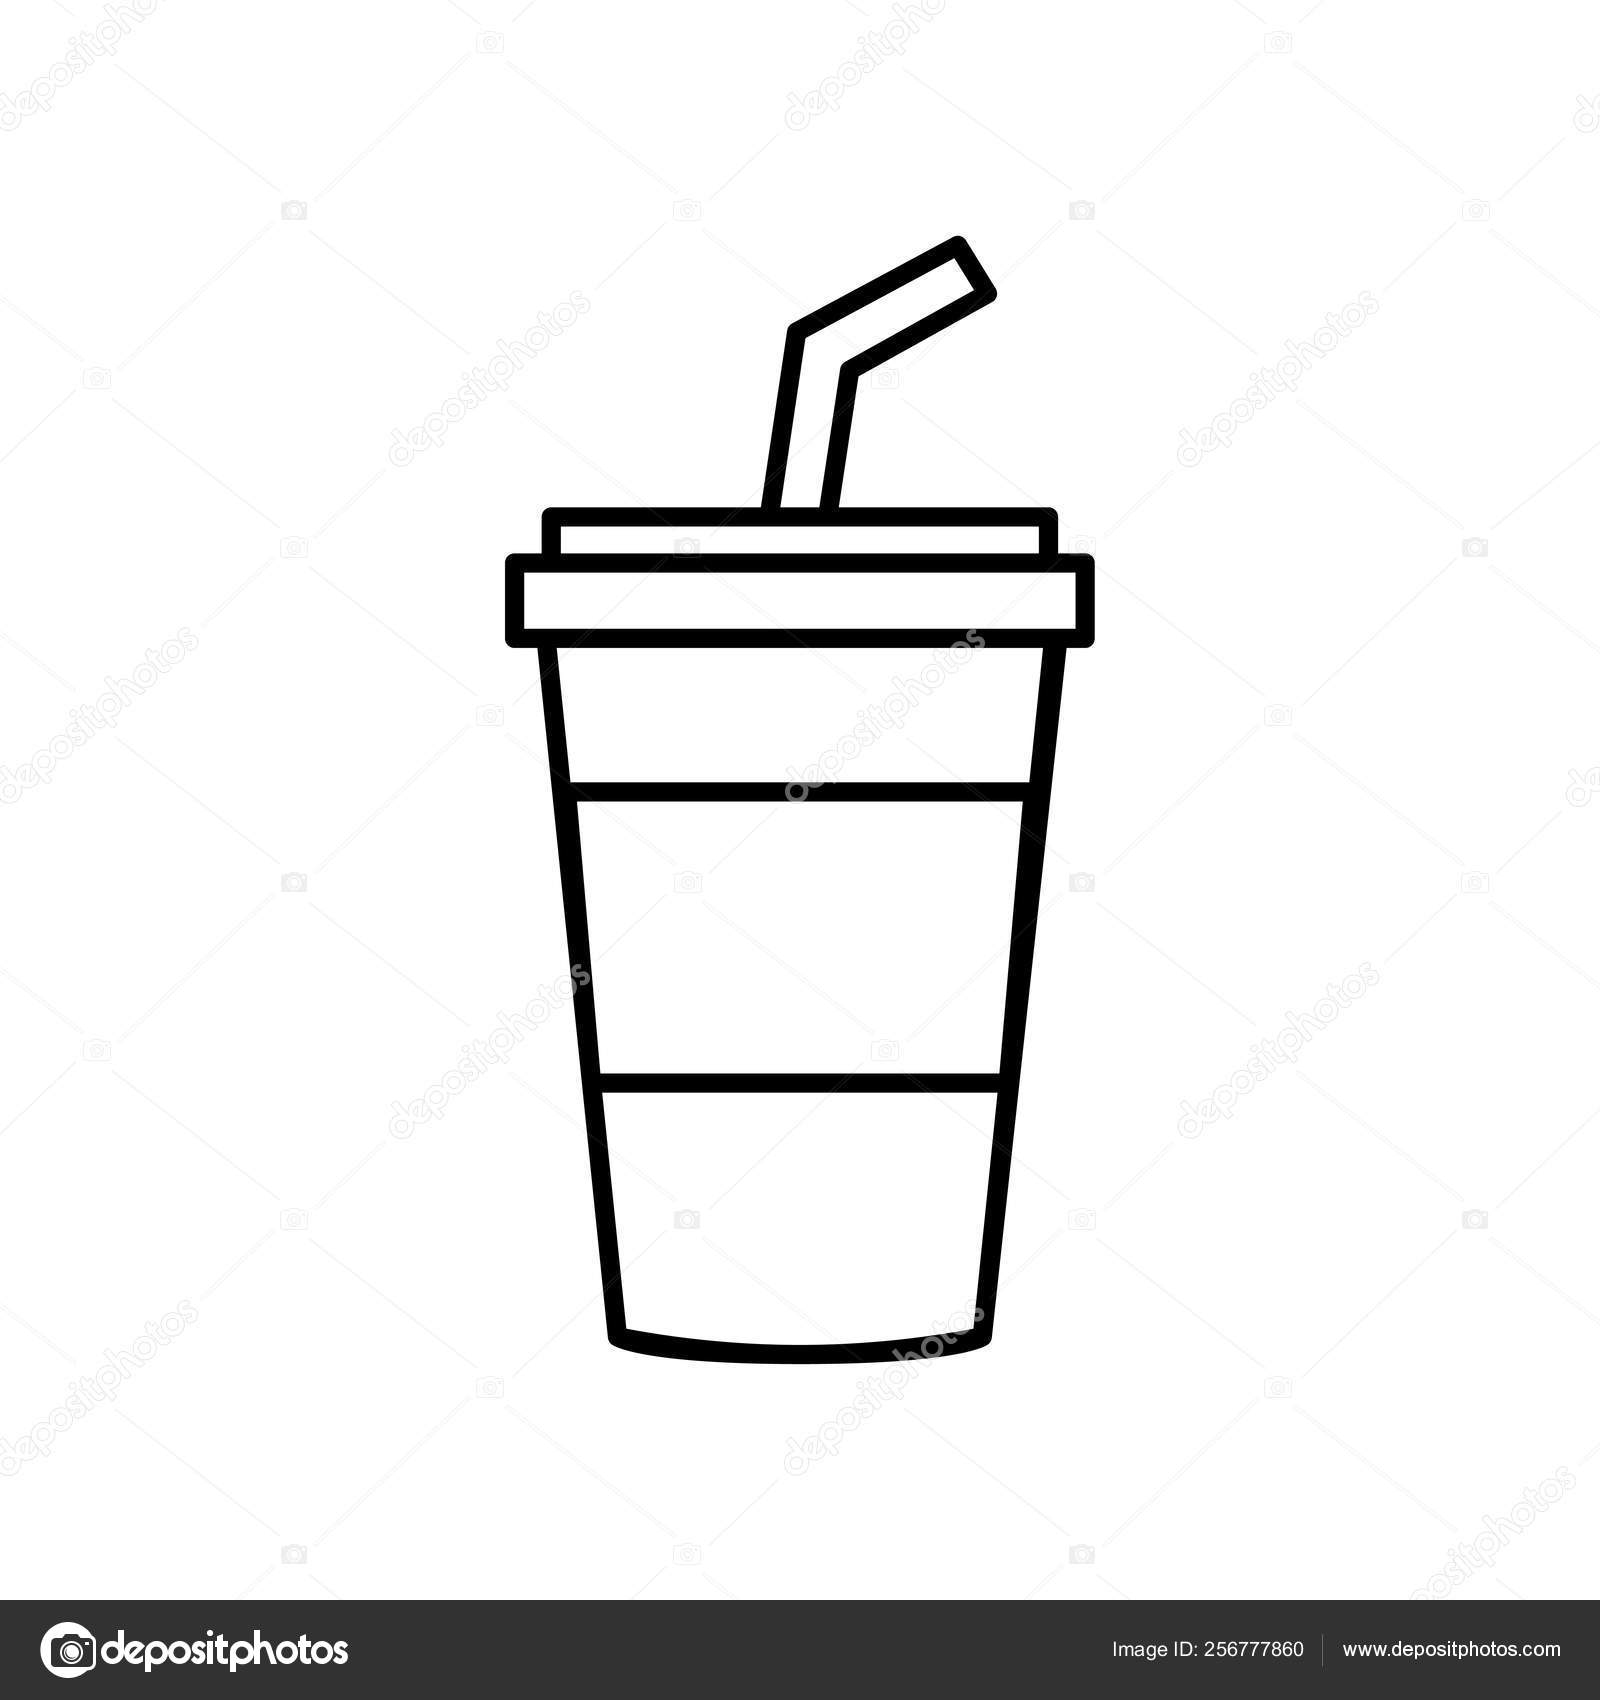 https://st4.depositphotos.com/2172759/25677/v/1600/depositphotos_256777860-stock-illustration-cartoon-soda-cup-icon-isolated.jpg